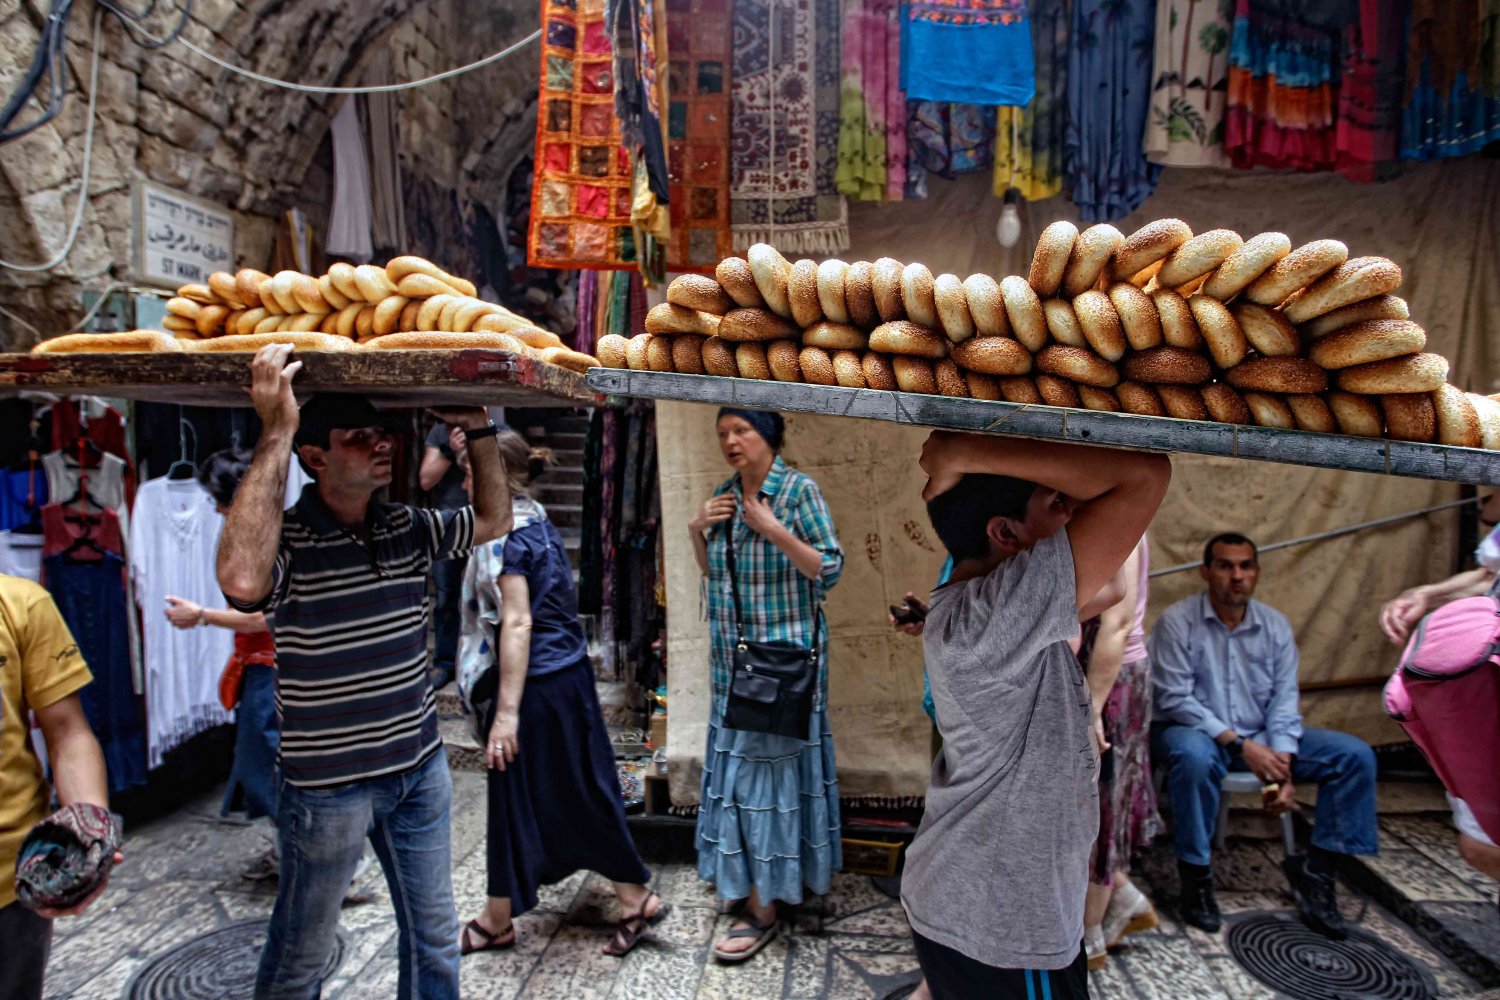 Sellers carry warm ka'ek bread from Jerusalem bakeries to buyers in Old City streets